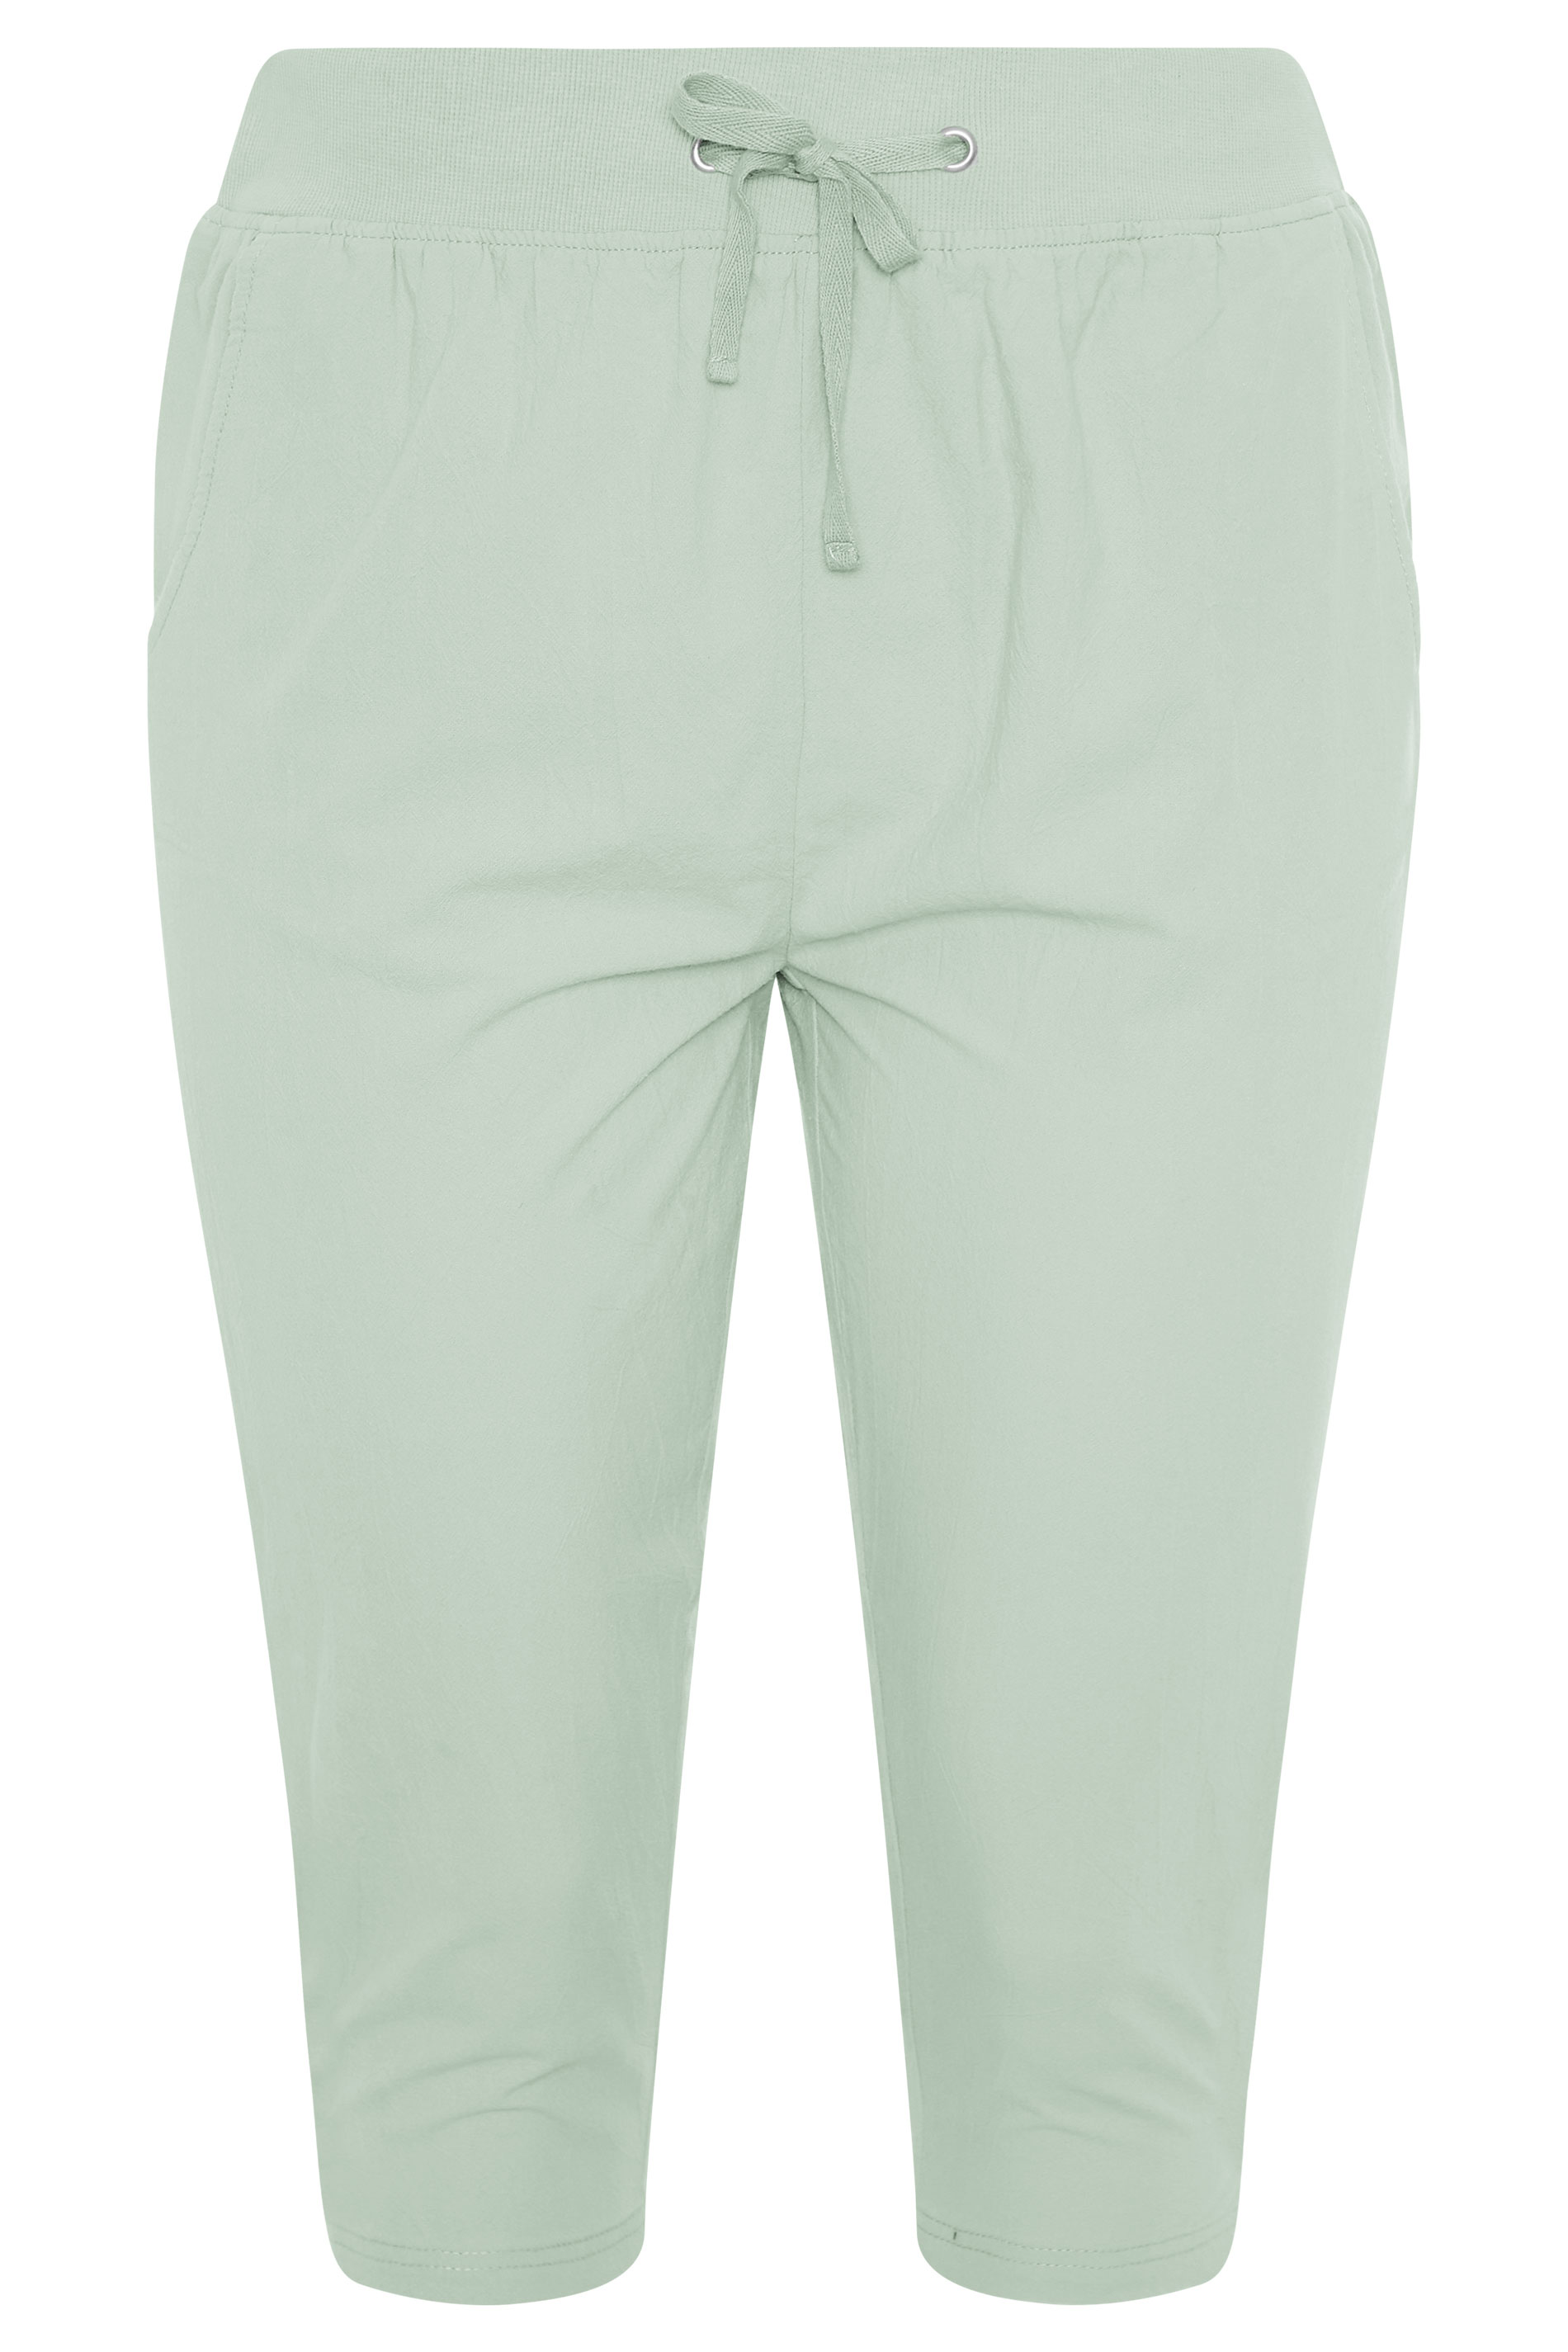 Grande taille  Pantalons Grande taille  Joggings | Jogging Vert Pastel Style Pantacourt - UX88713